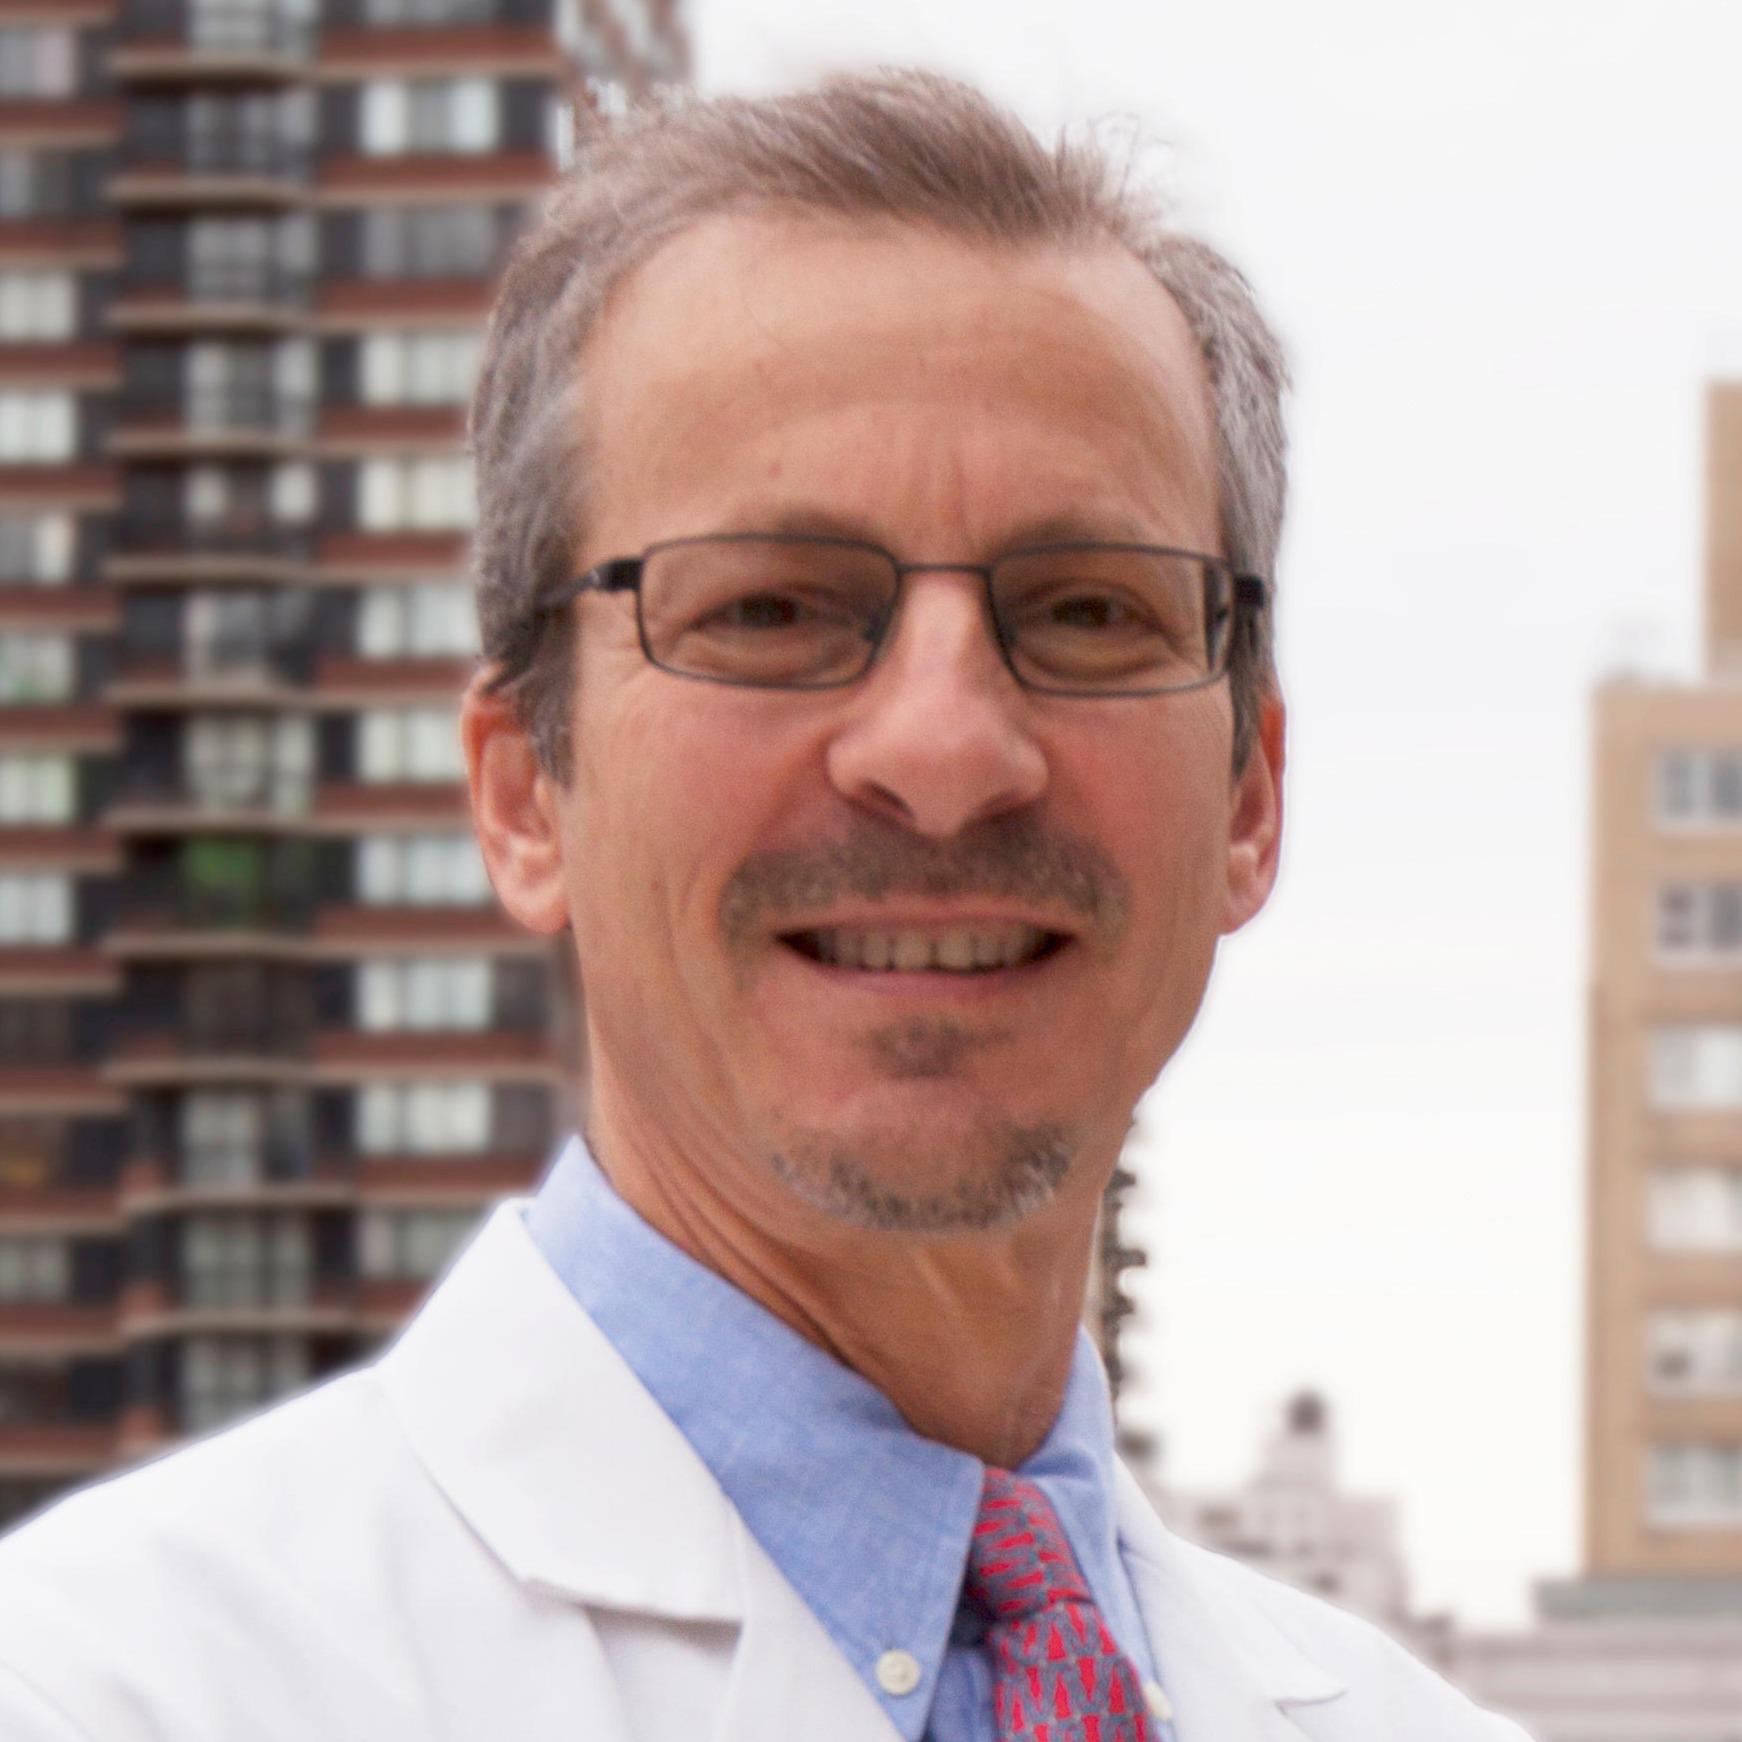 Daniel I. Richman, MD - Pain Management, Spine | HSS